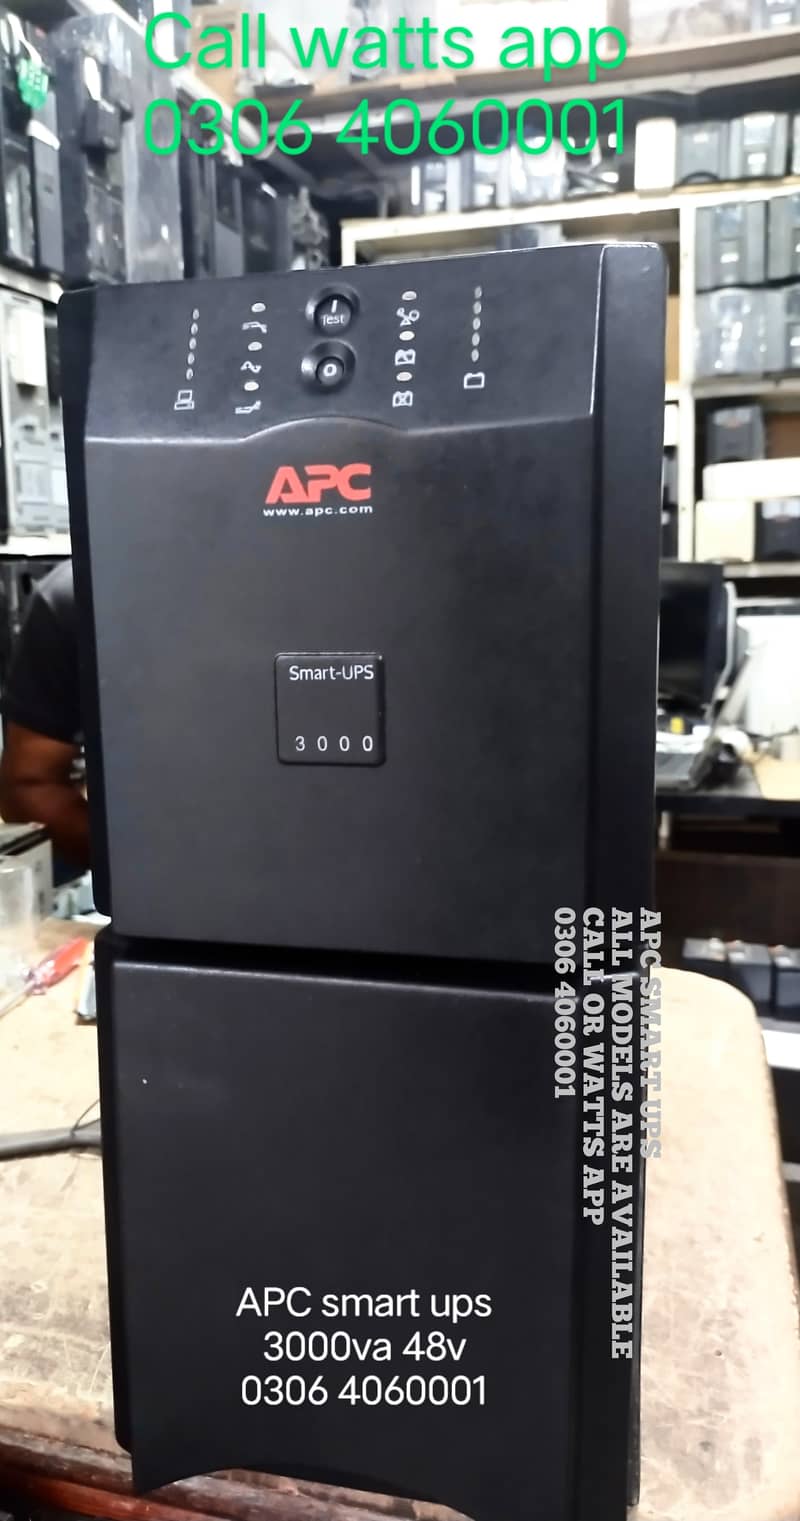 APC smart Ups 650 vA 480watts with battery 4